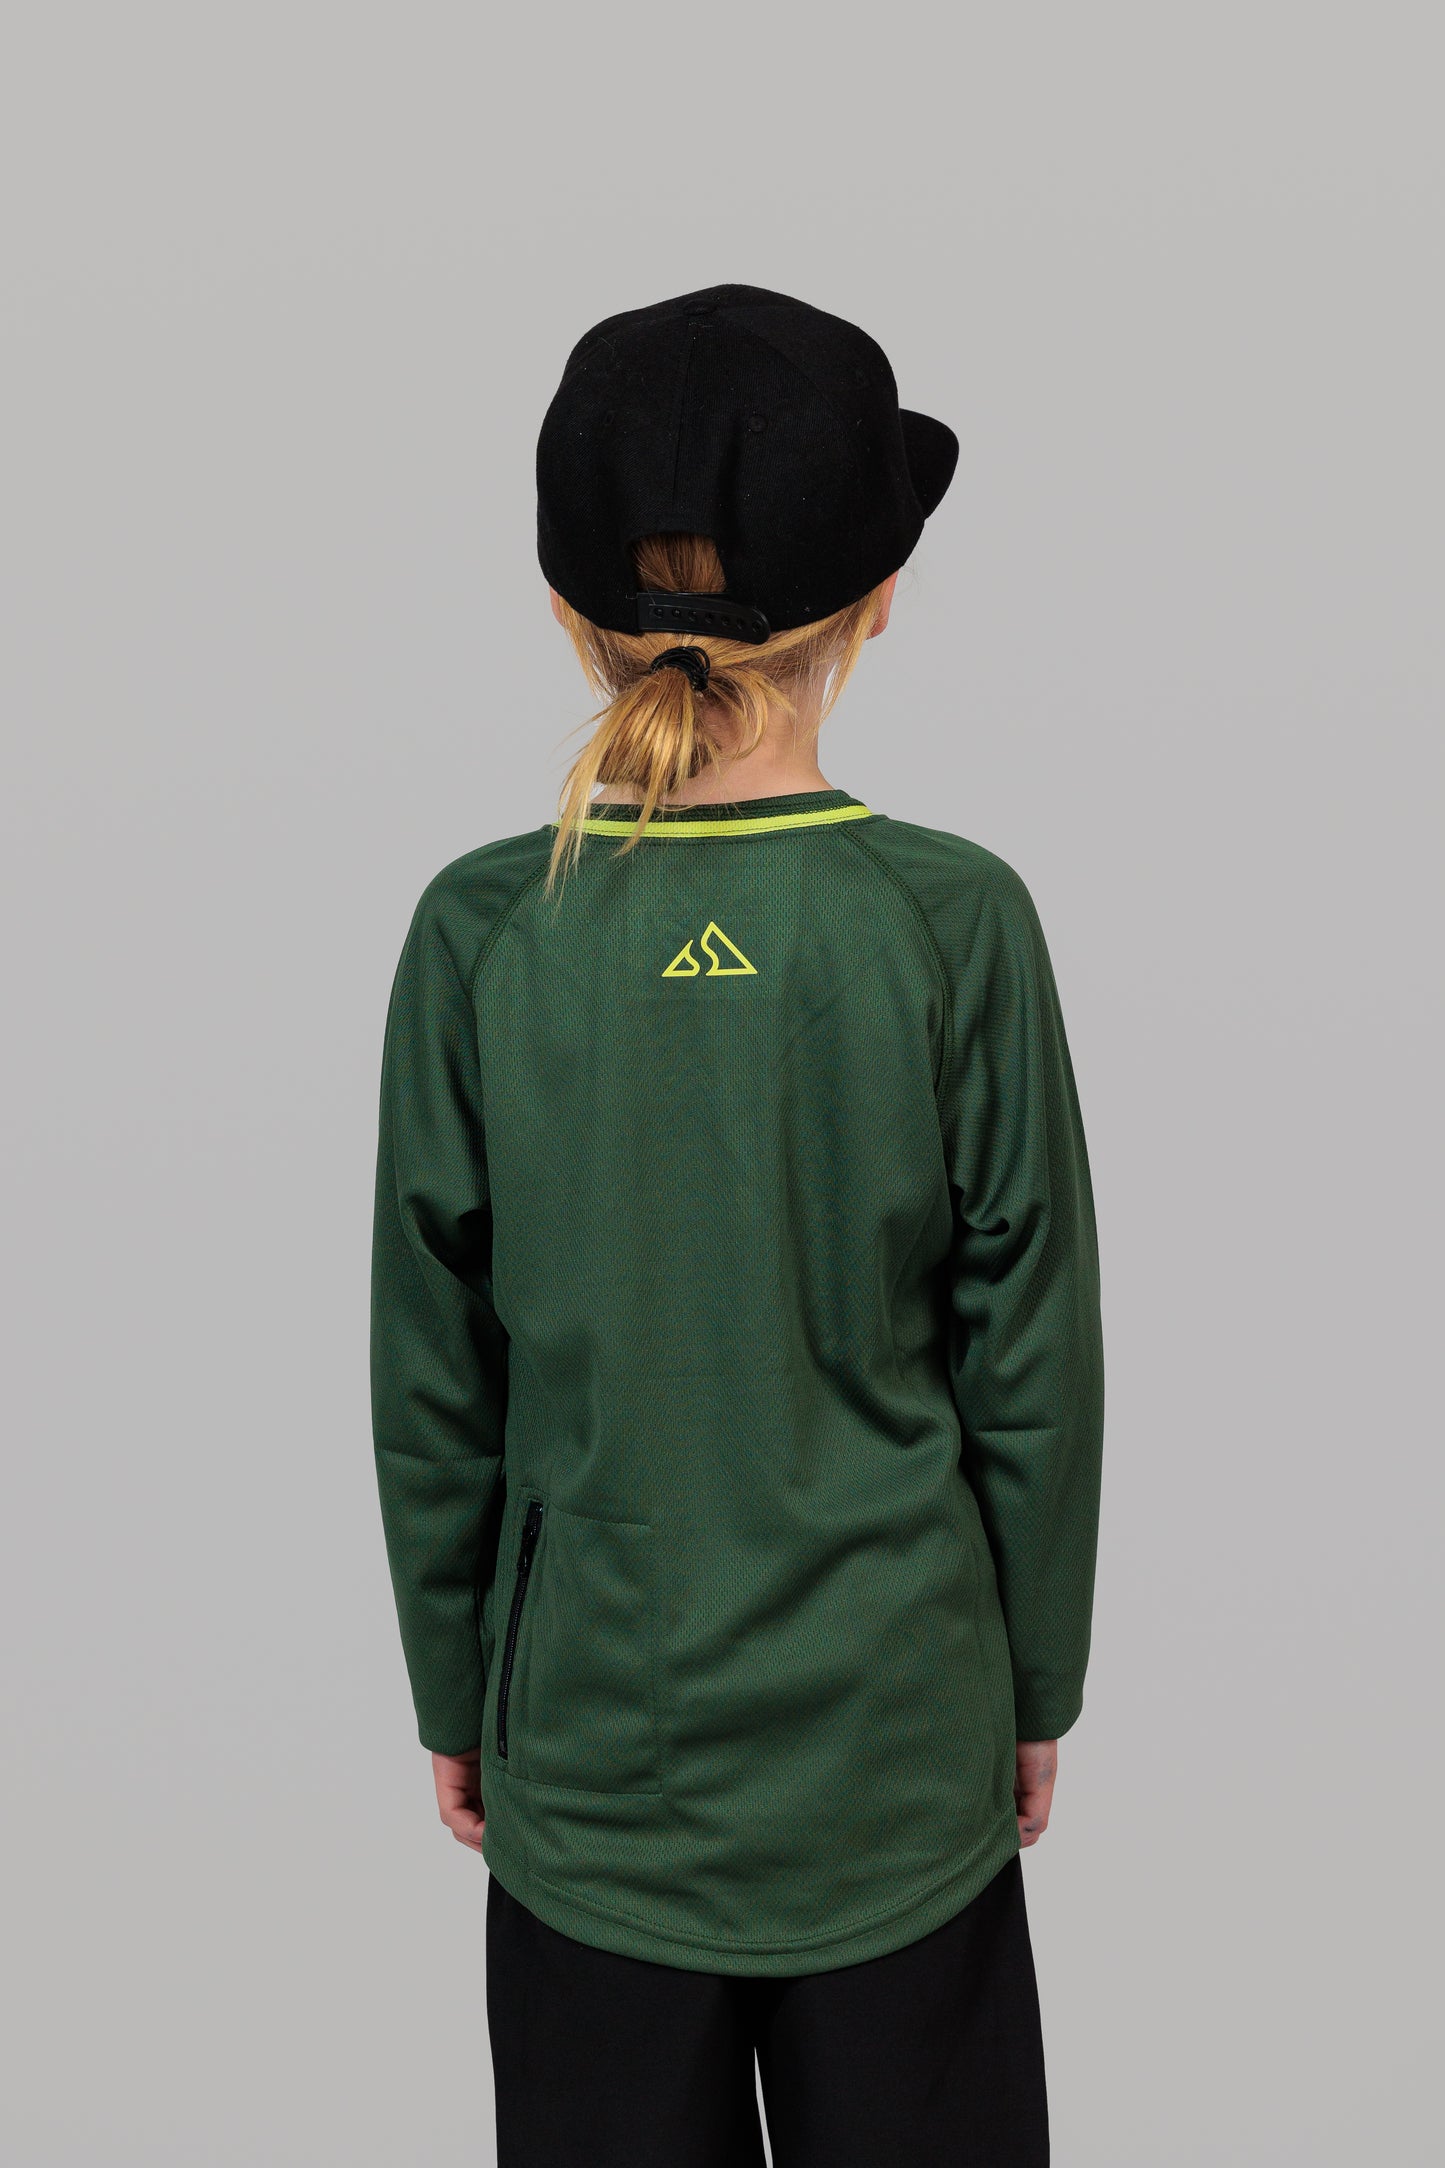 Send It Kids Long Sleeved MTB Jersey | Bold Green